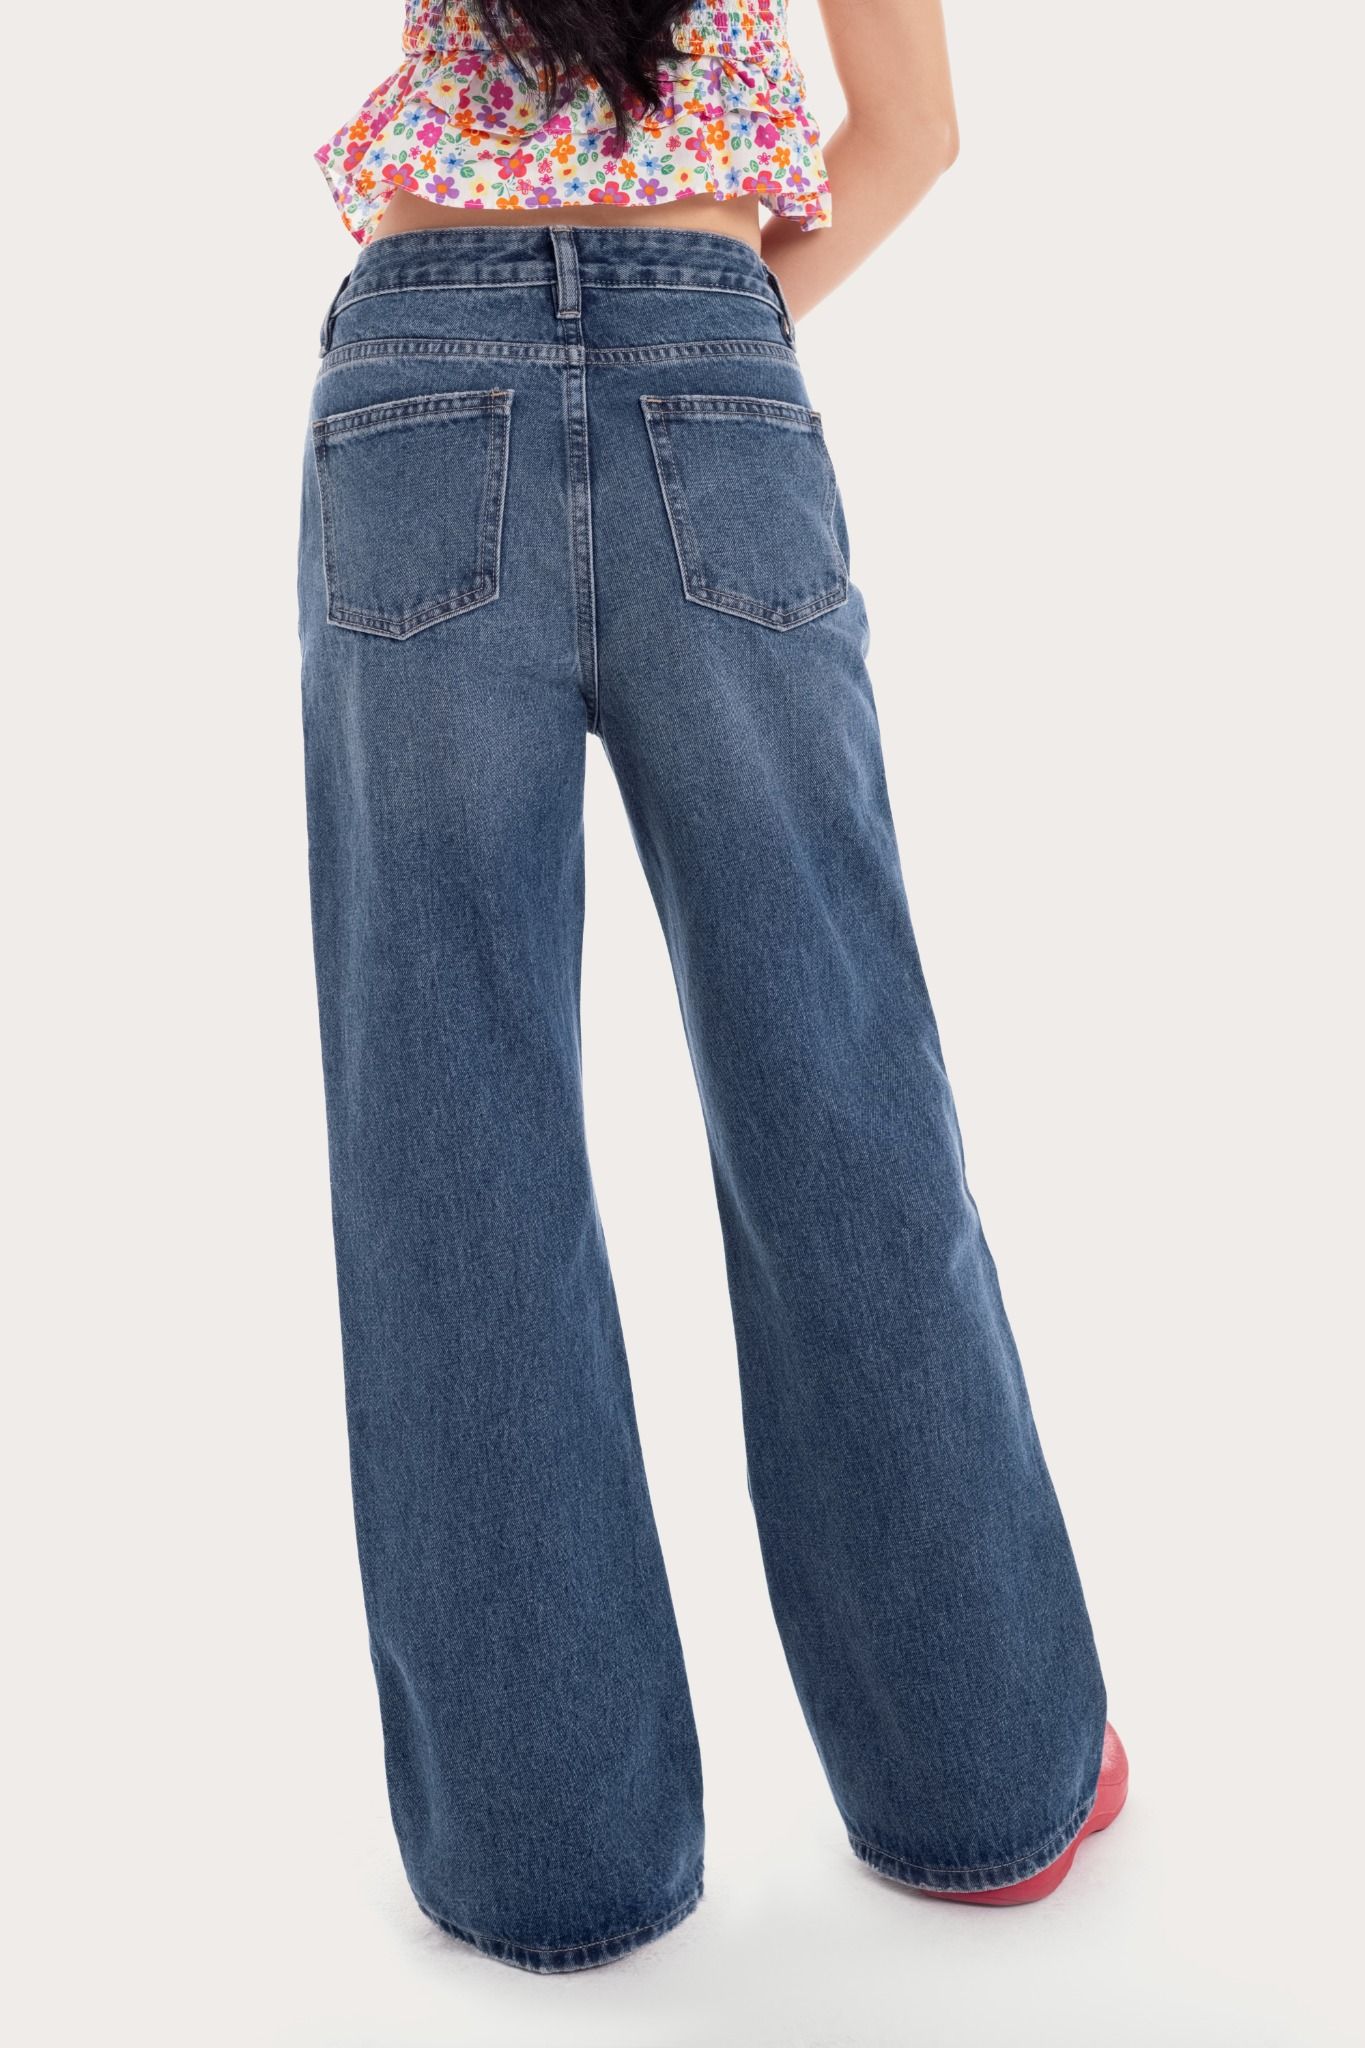  Medium Blue Wash Hight Waist Flared Jeans 